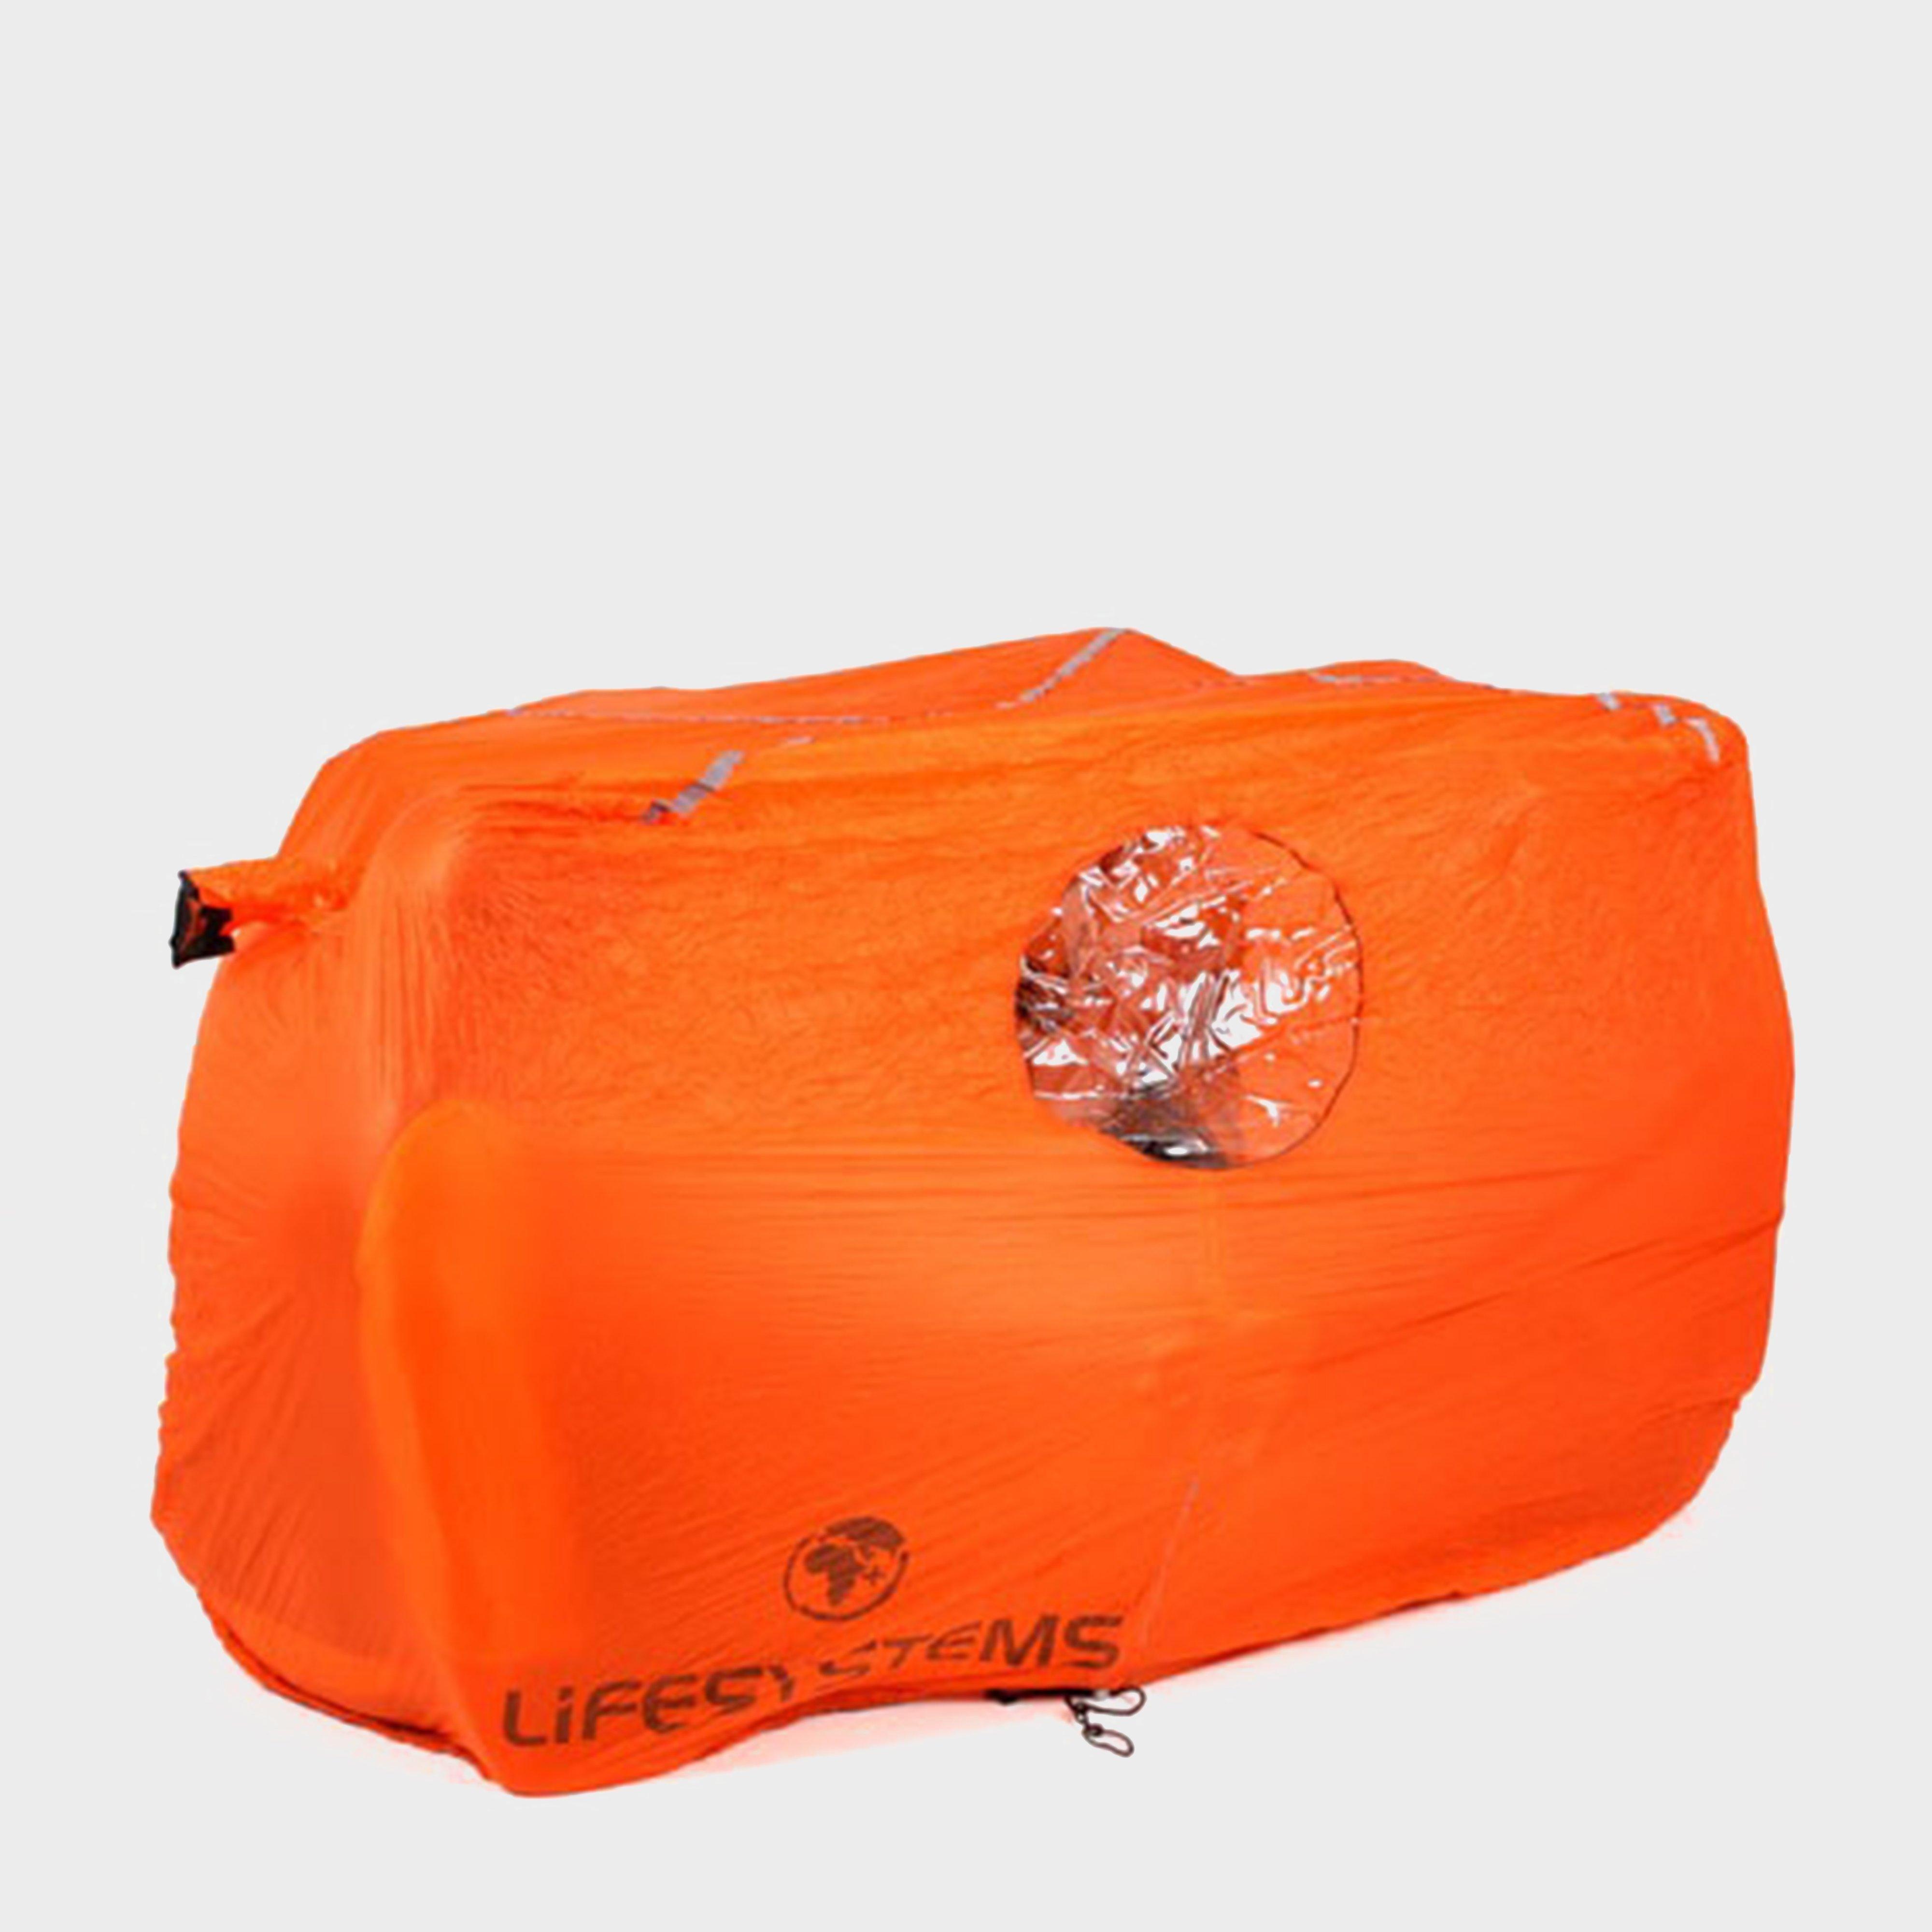 Lifesystems 4 Person Survival Shelter - Orange/orange  Orange/orange